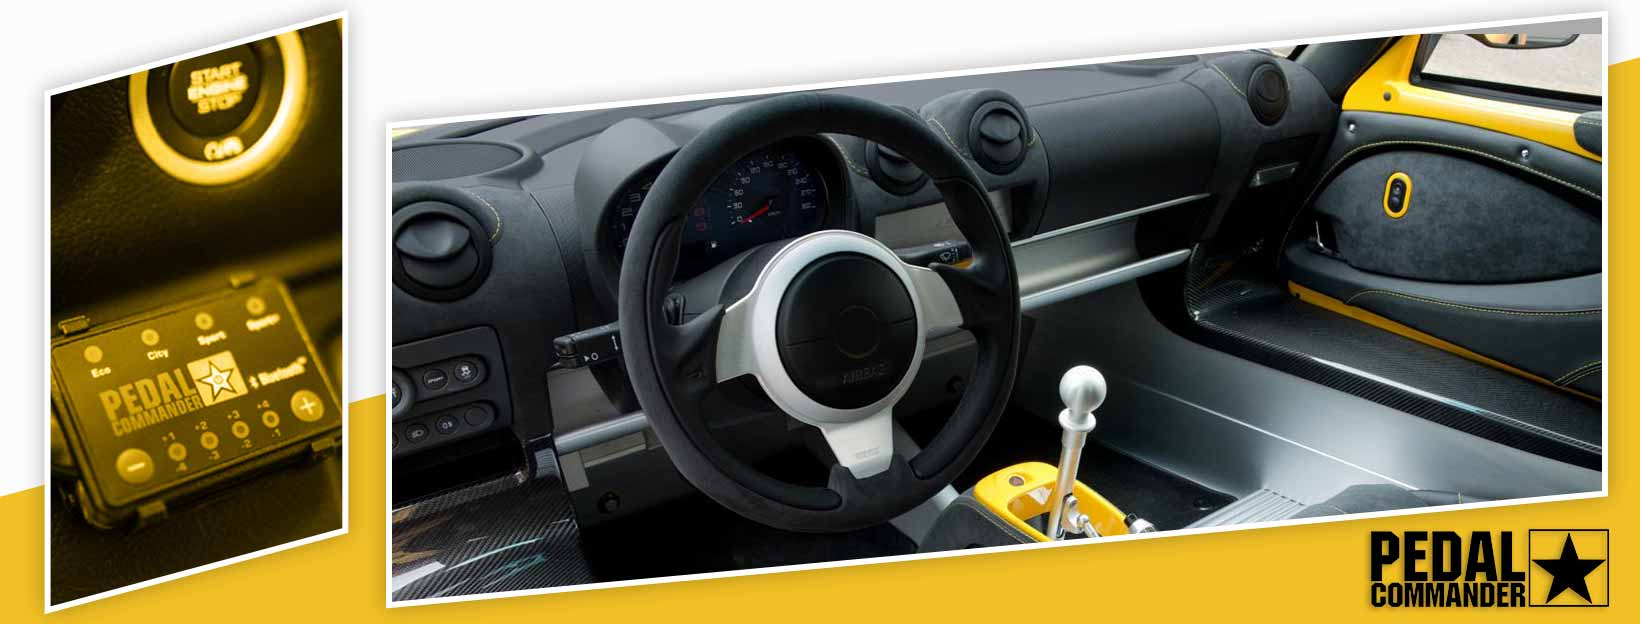 Pedal Commander for Lotus Elise - interior